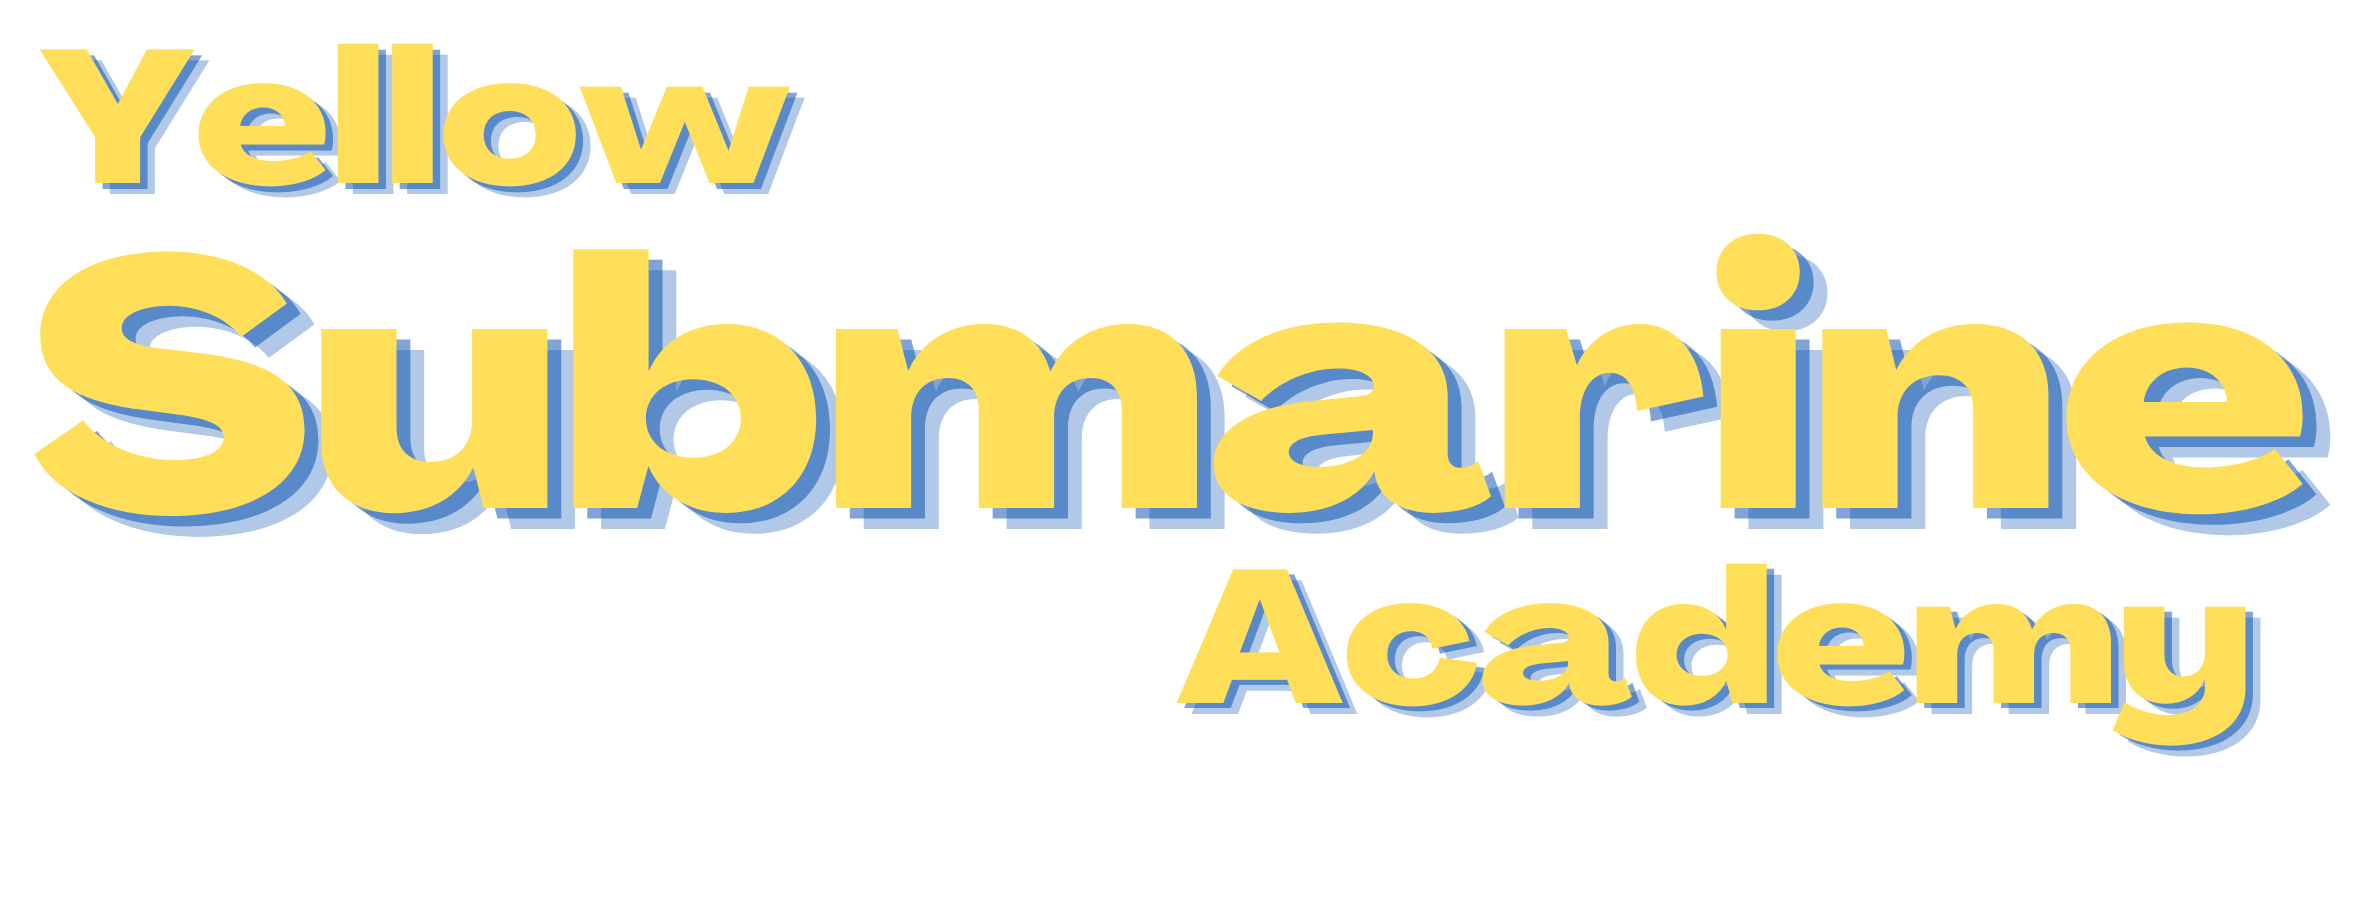 Yellow Academy Banner